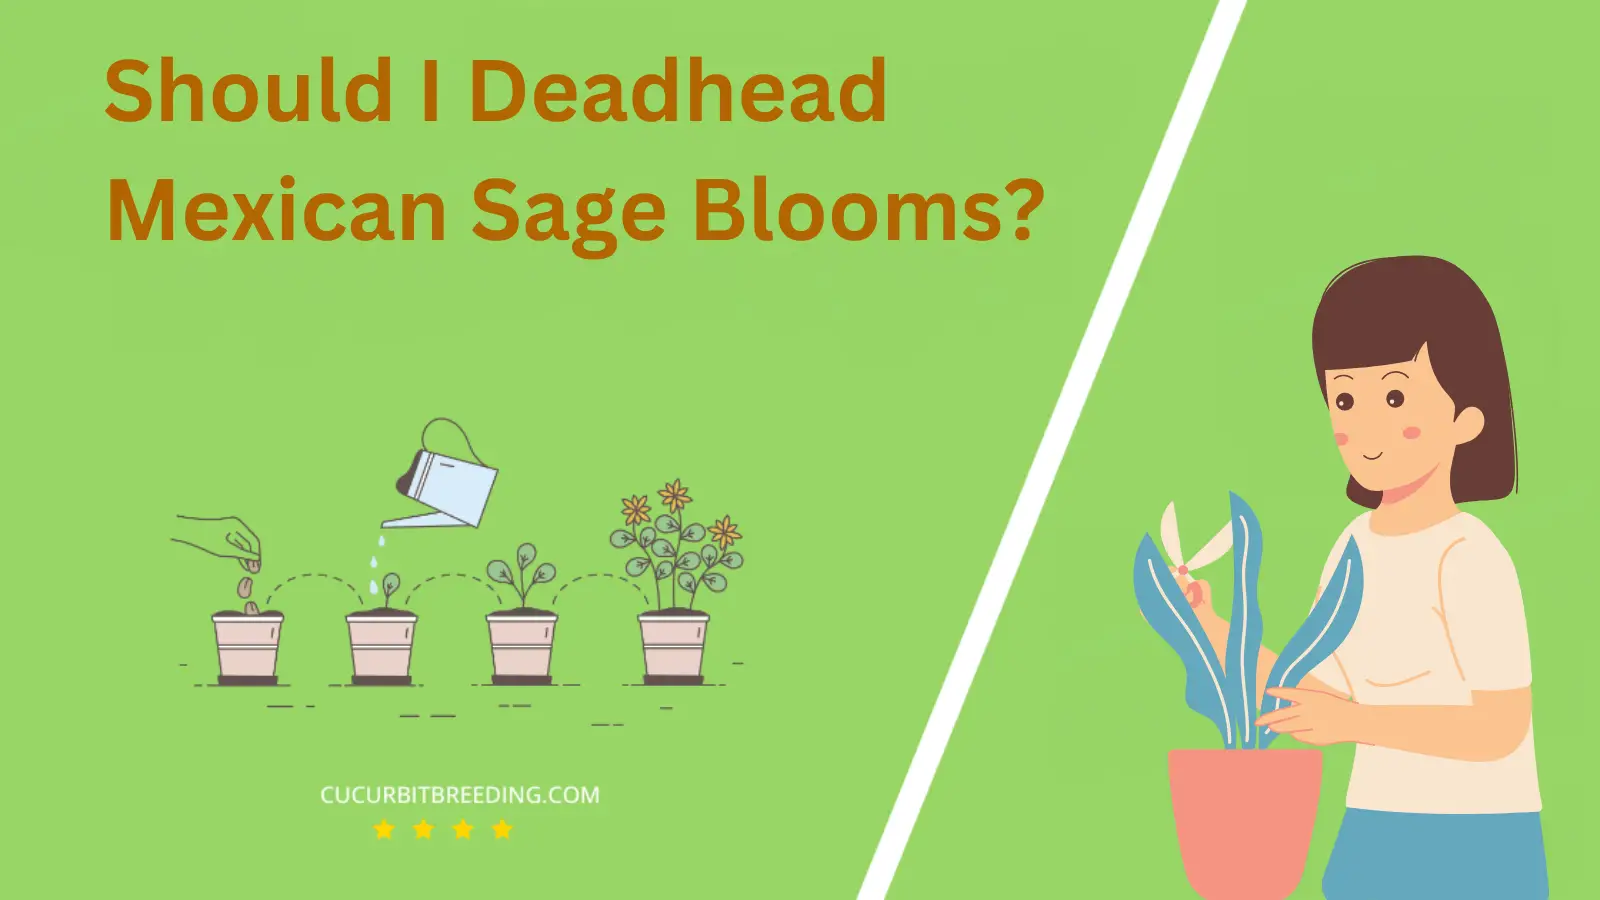 Should I Deadhead Mexican Sage Blooms?